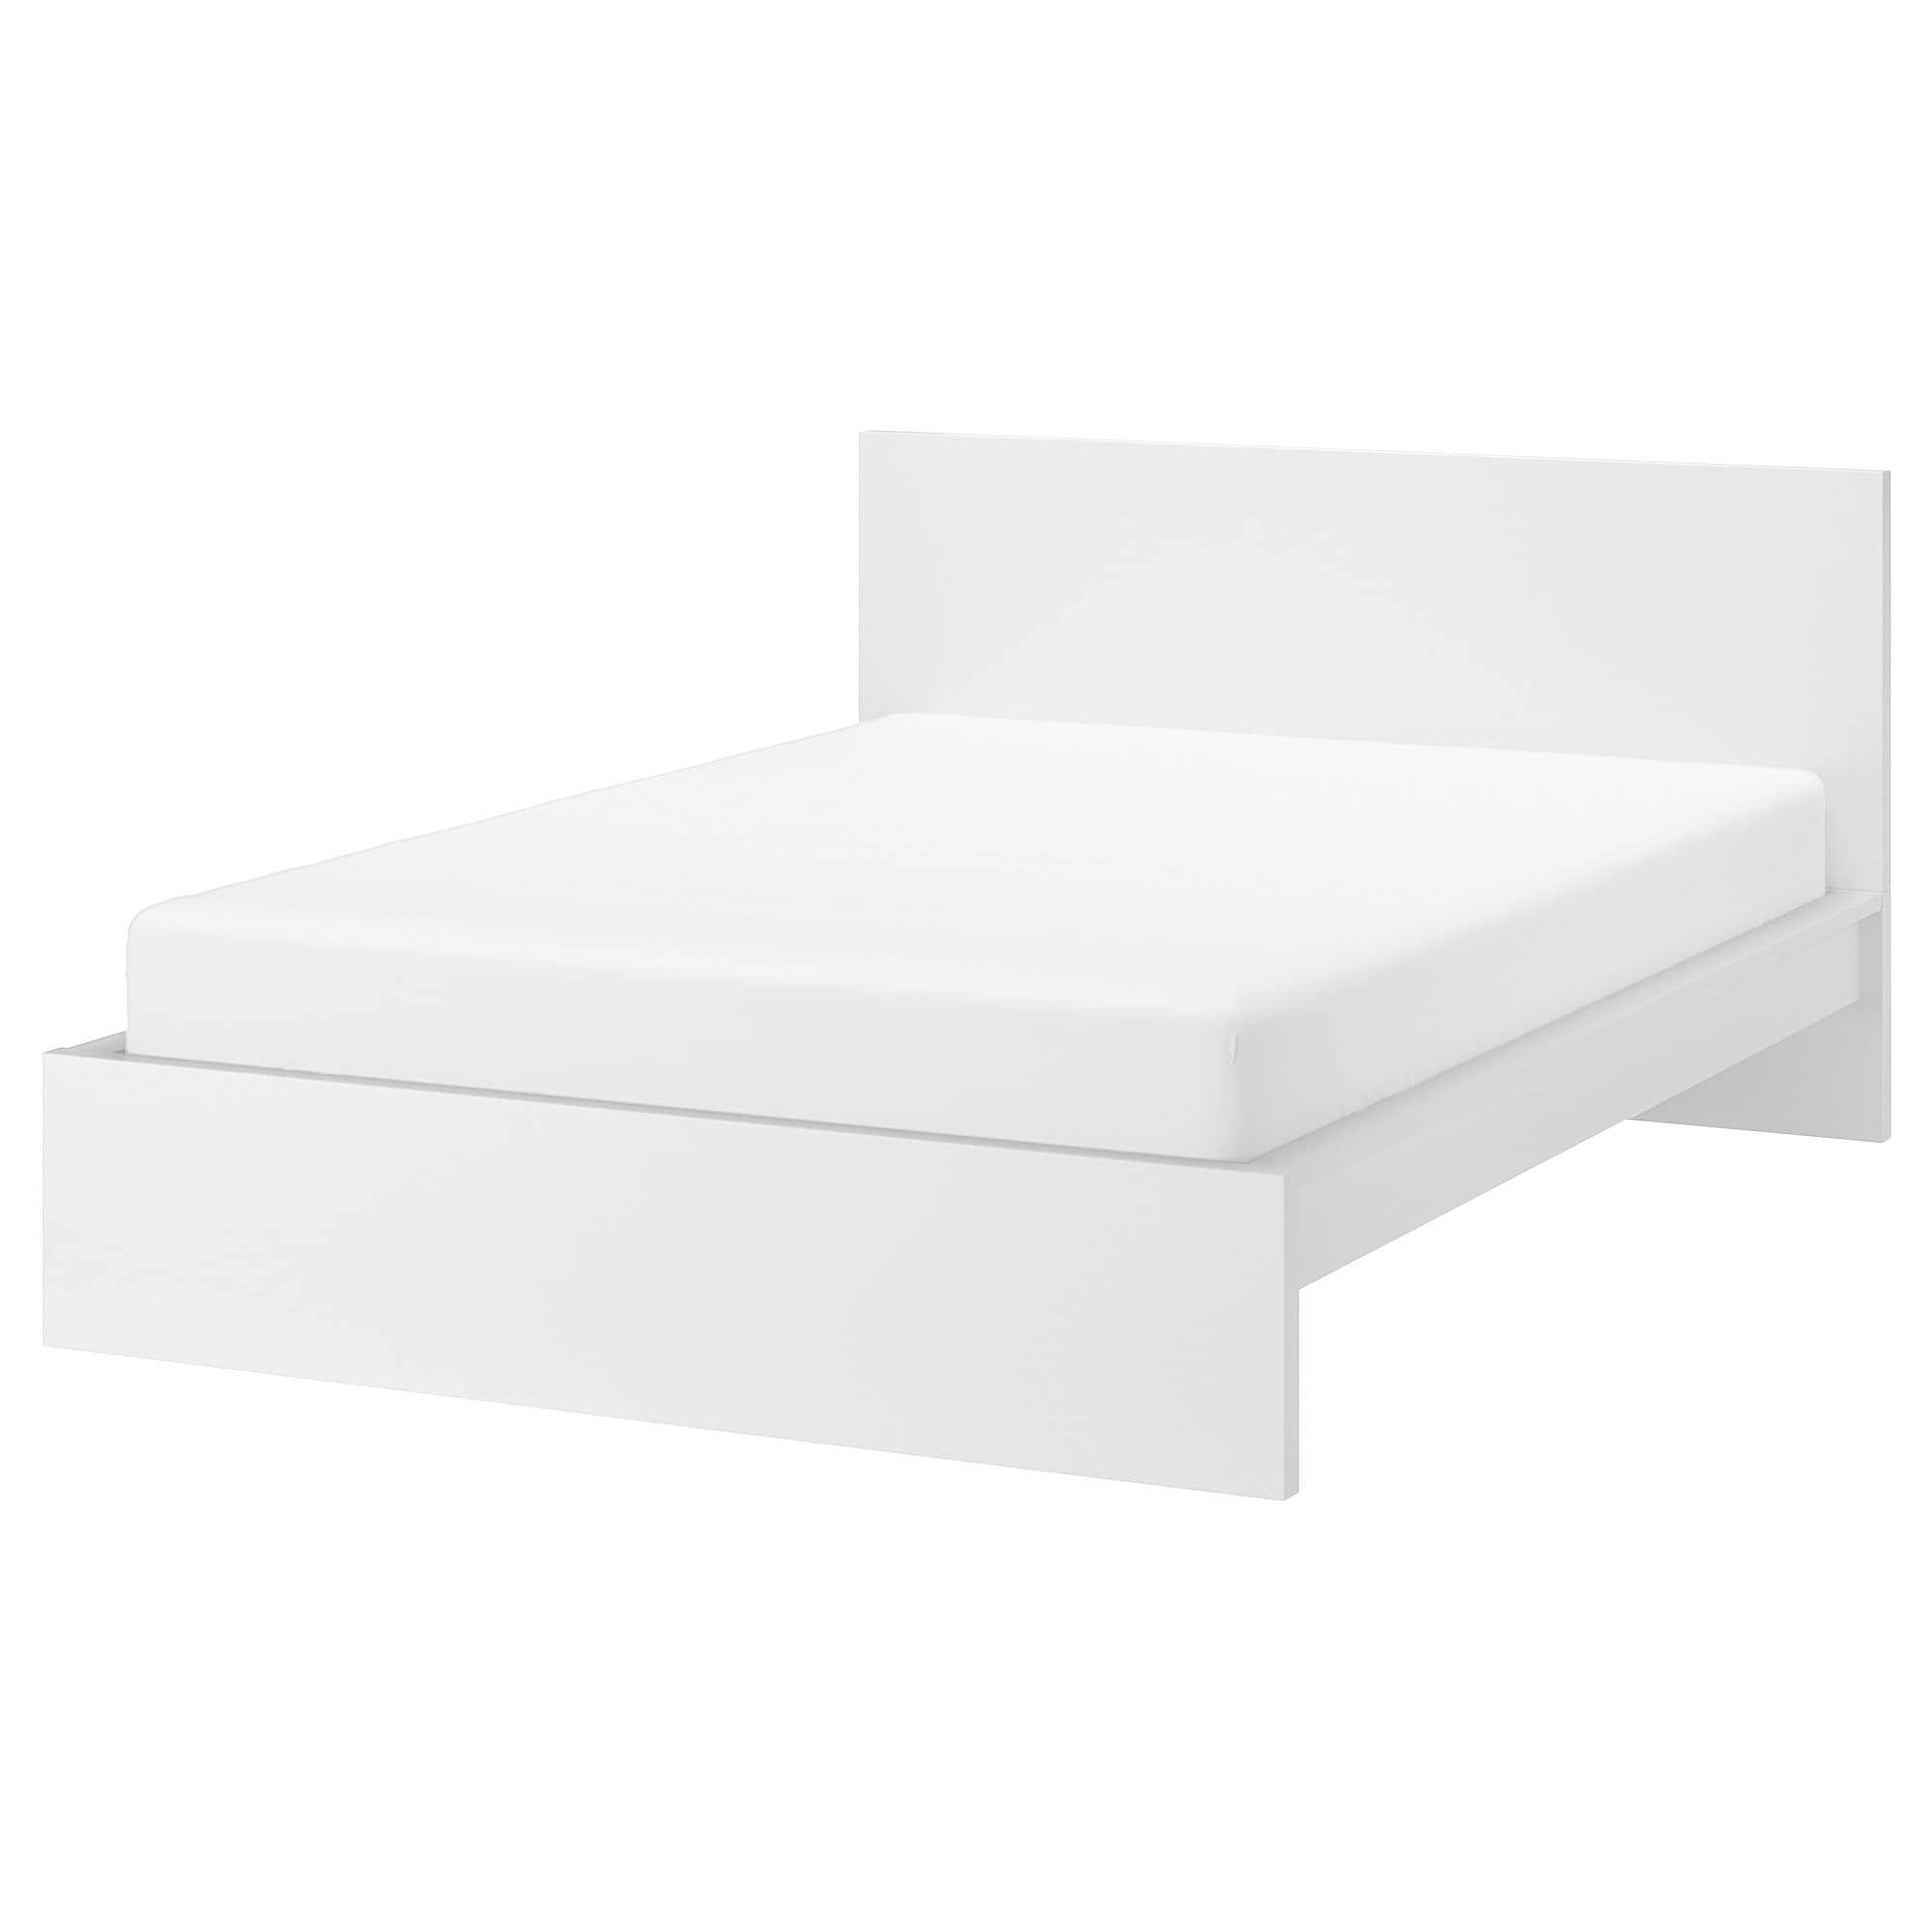 malm-bed-frame-high-white__0749130_PE745499_S5